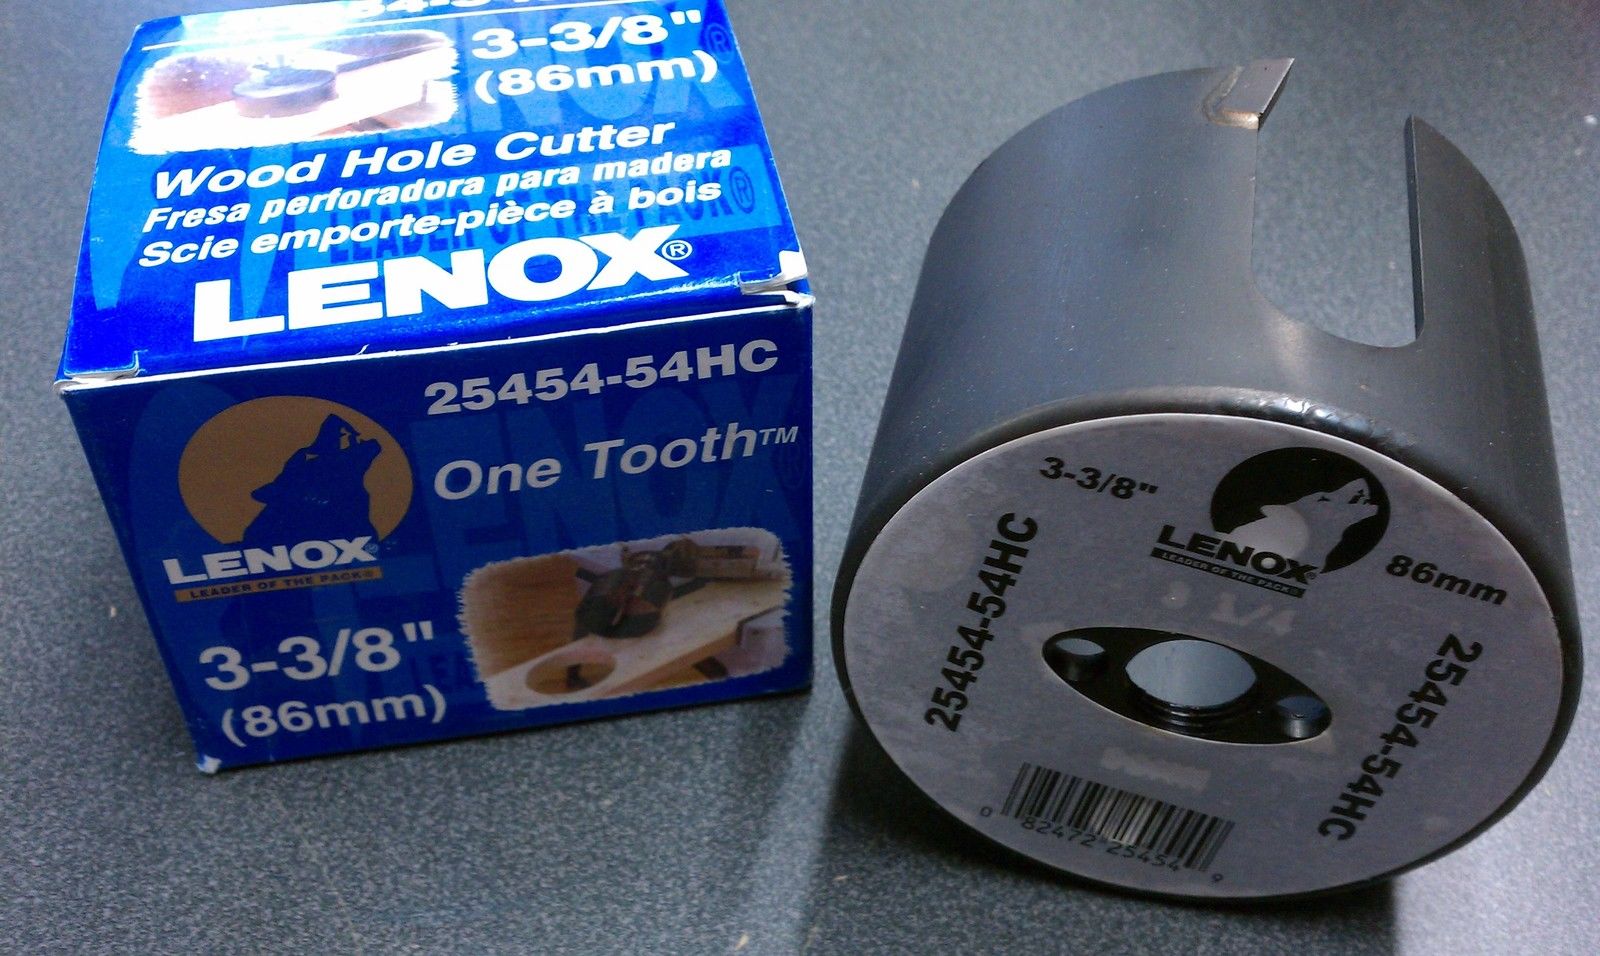 Lenox 25454-54HC One Tooth Hole Saw 3-3/8" (86mm)